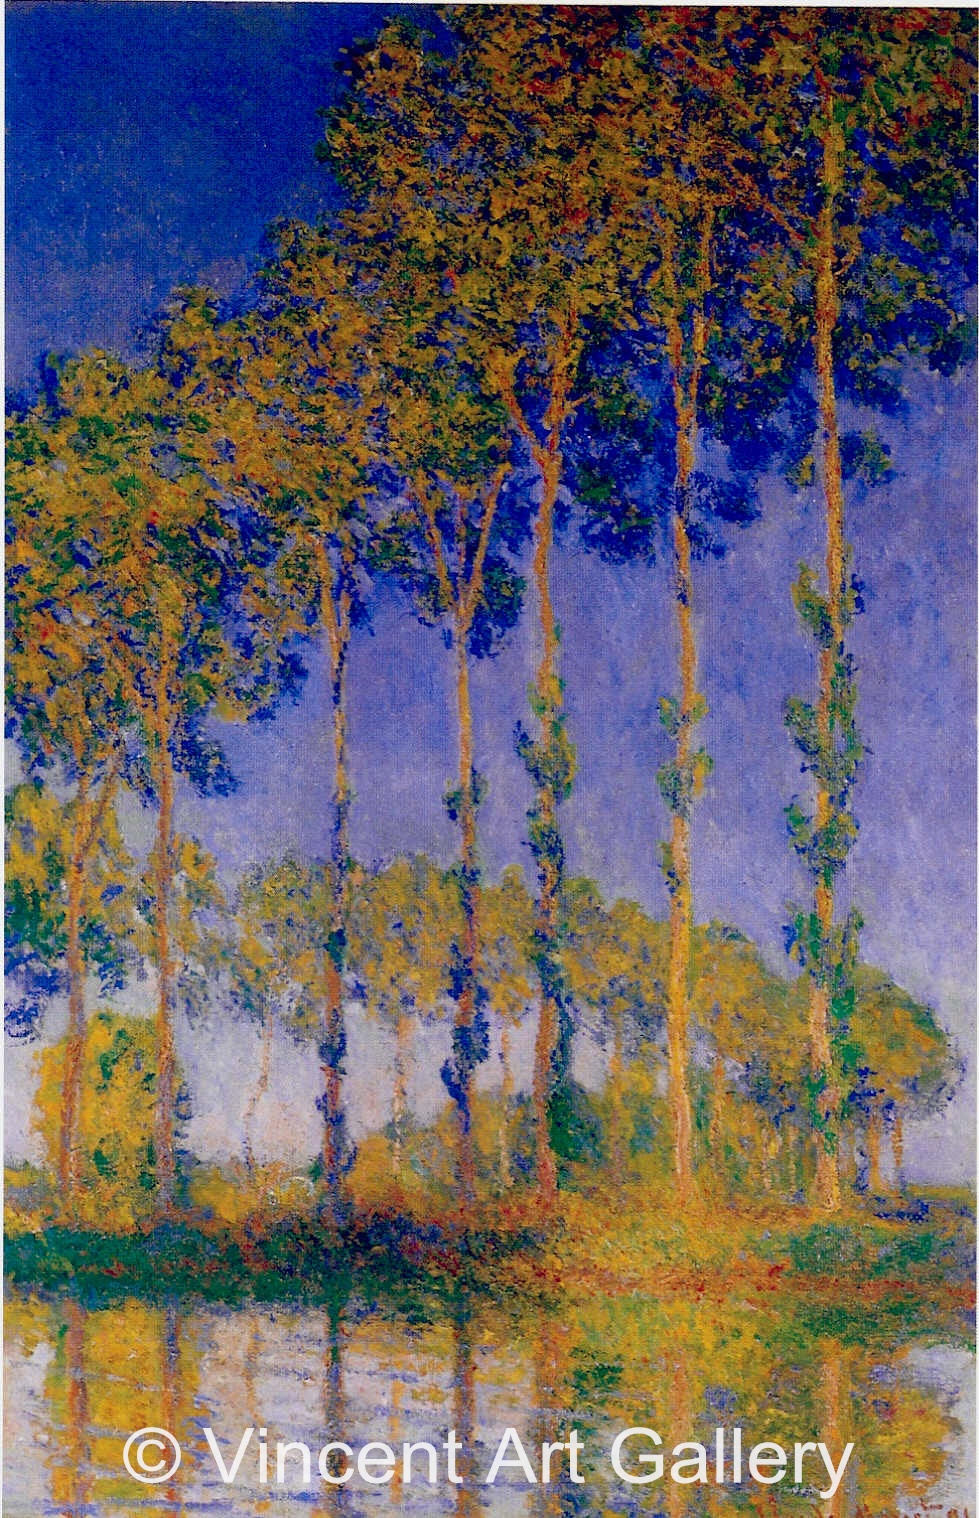 A2789, MONET, A Row of Poplars, 1891